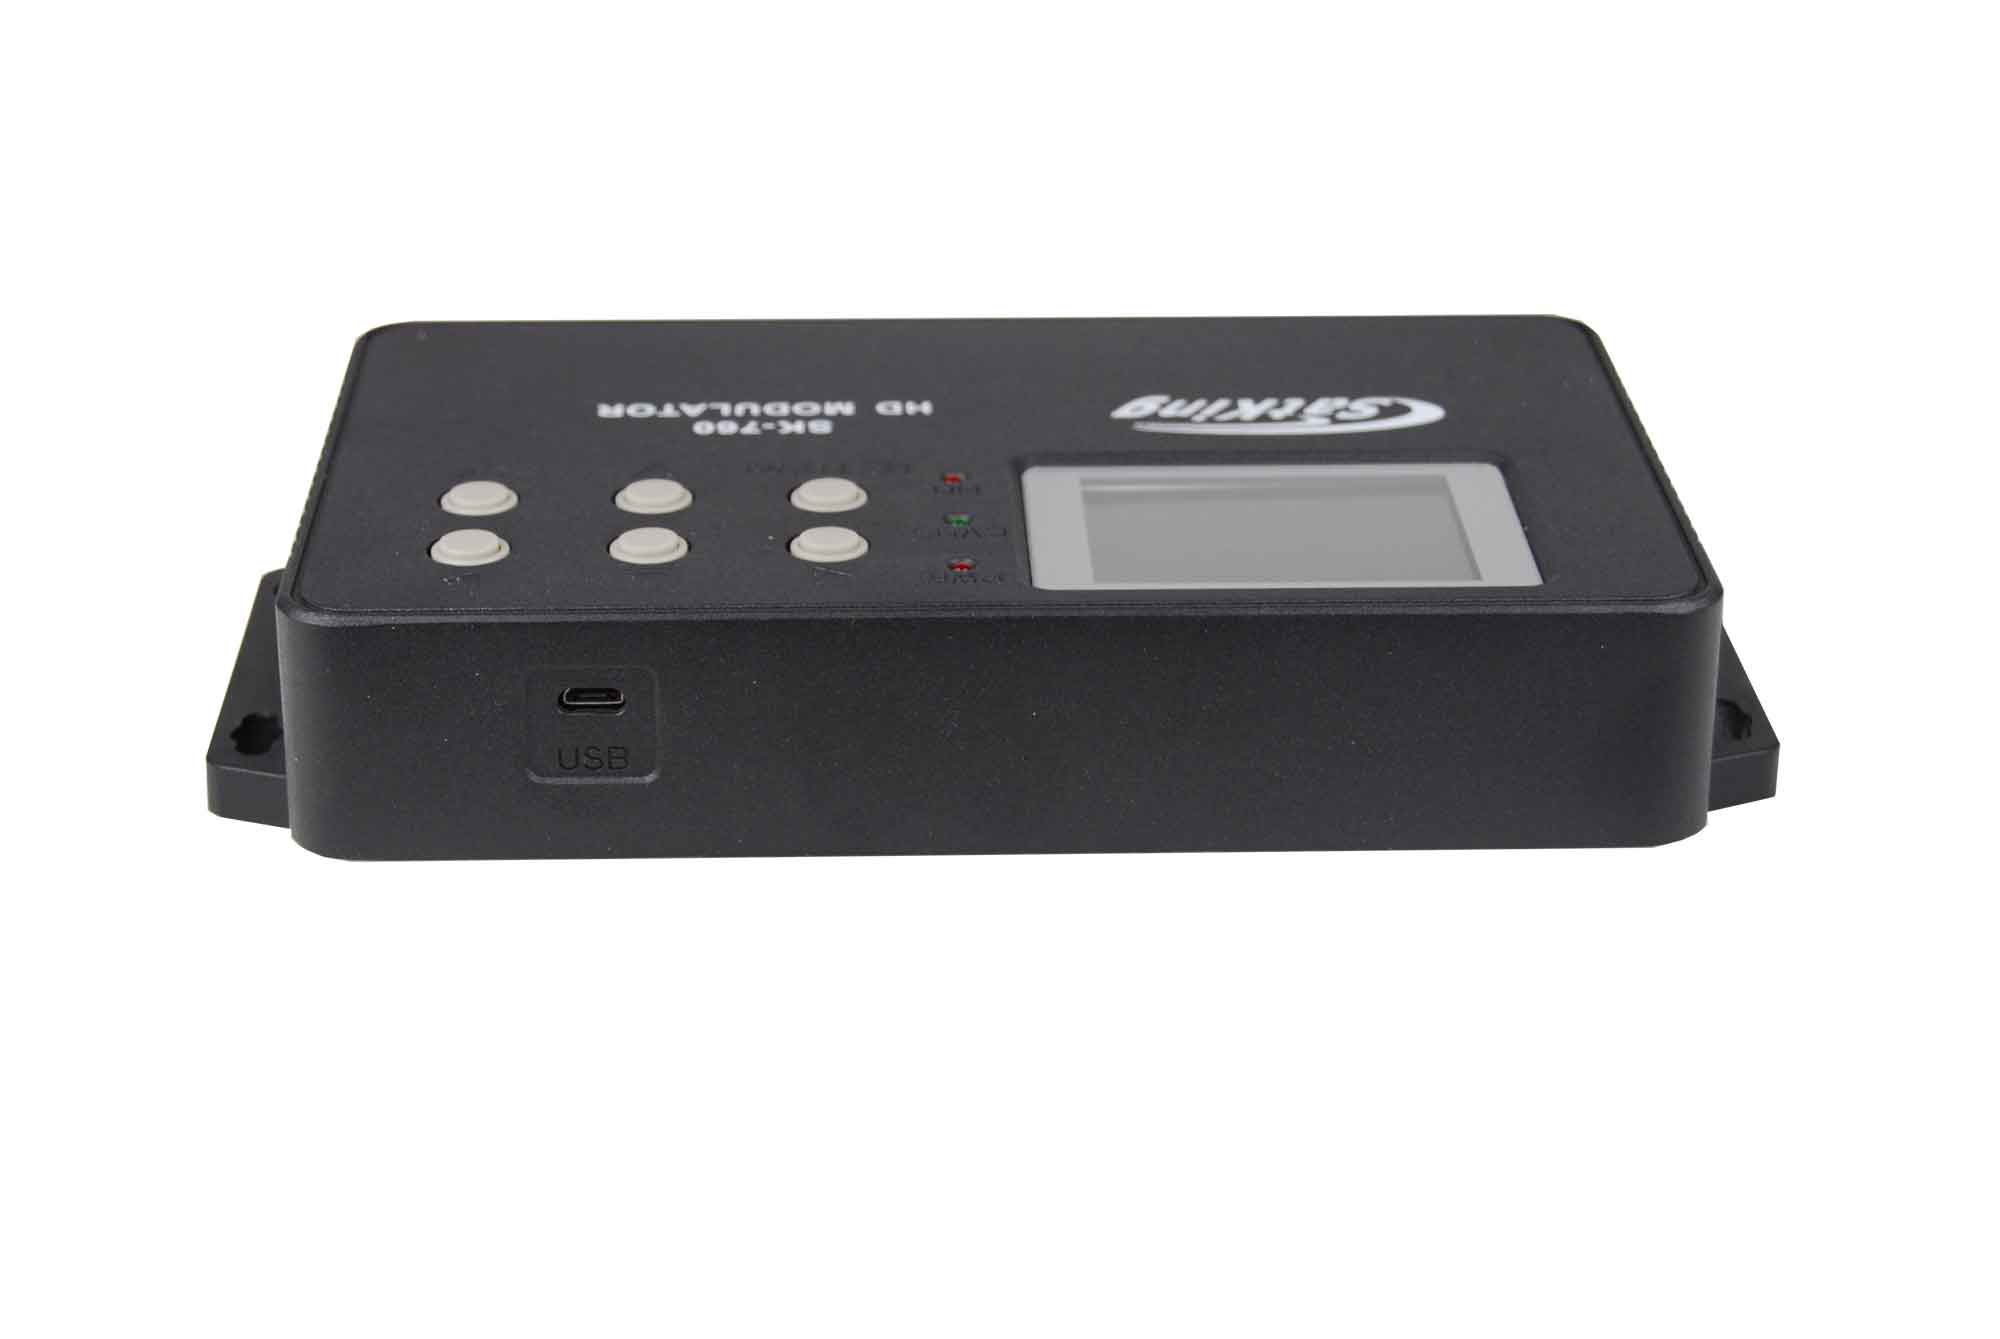 SatKing SK-760 Single Input HD Modulator